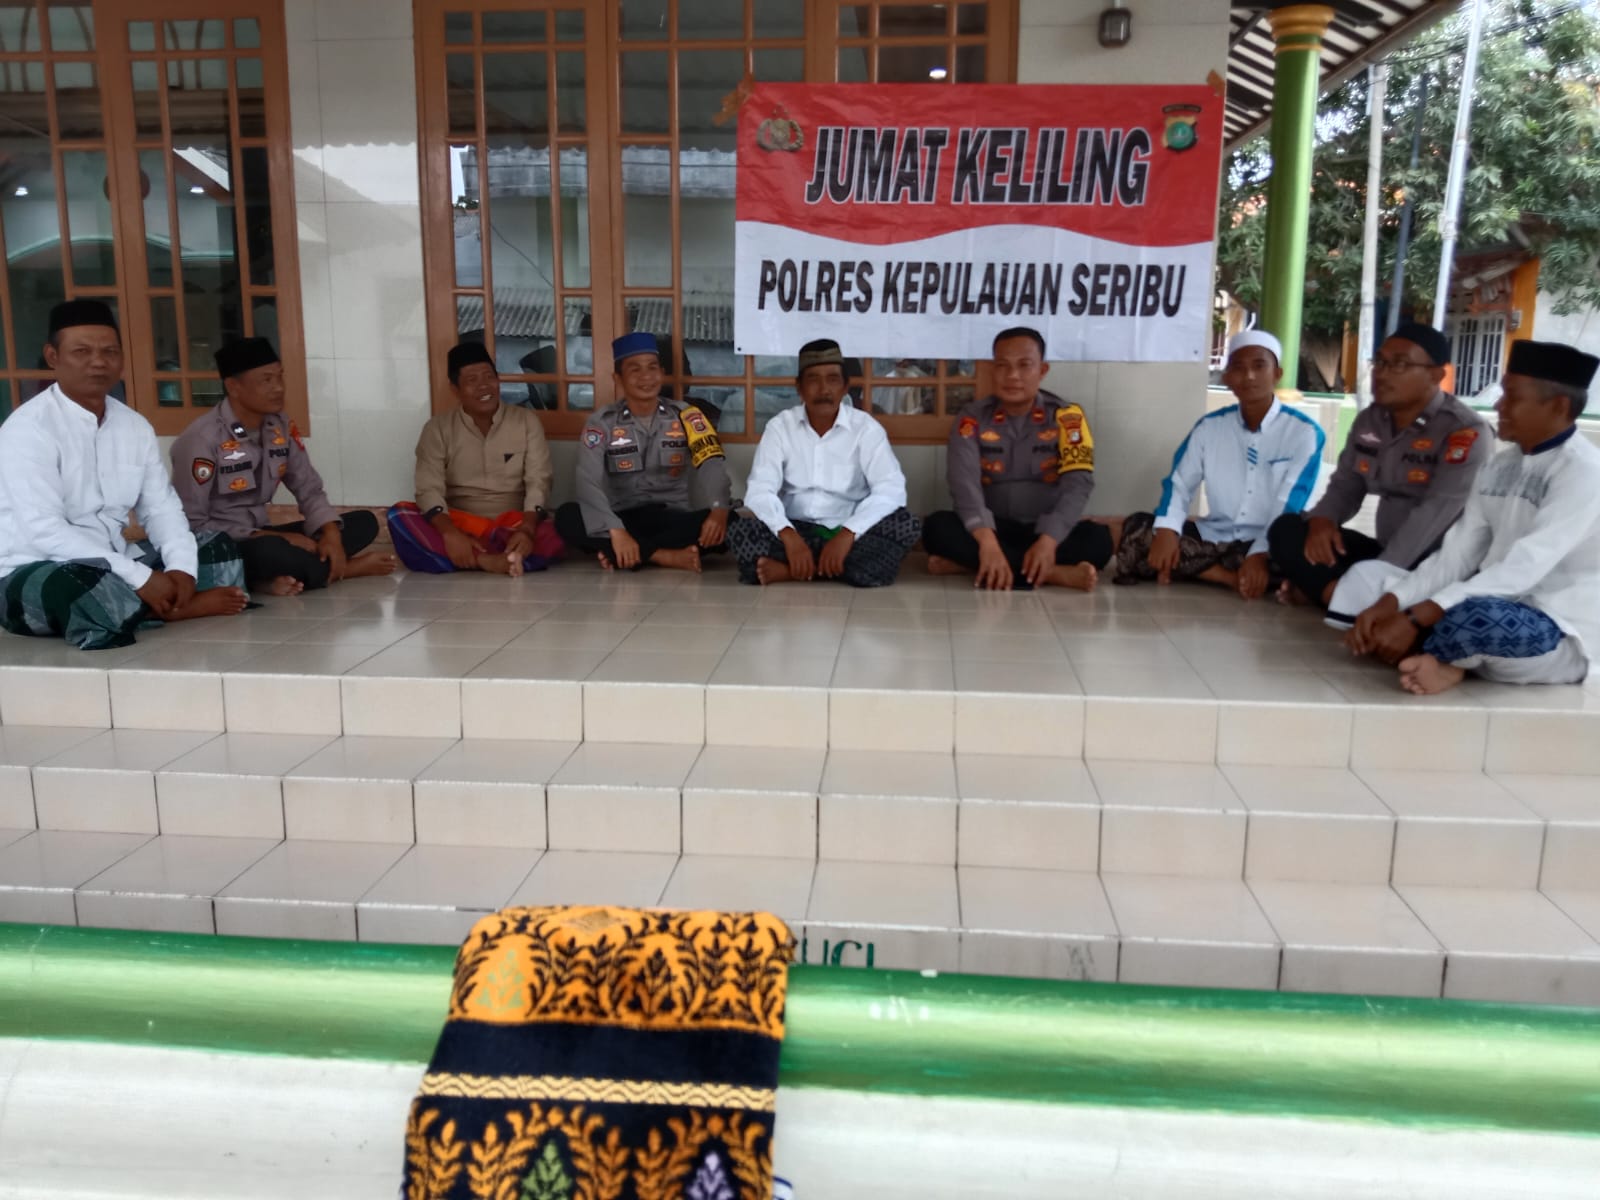 Polsek Kepulauan Seribu Utara Gelar "Jum'at Keliling Polres" di Pulau Panggang Menyampaikan Pesan Kamtibmas Menjelang Pemilu 2024